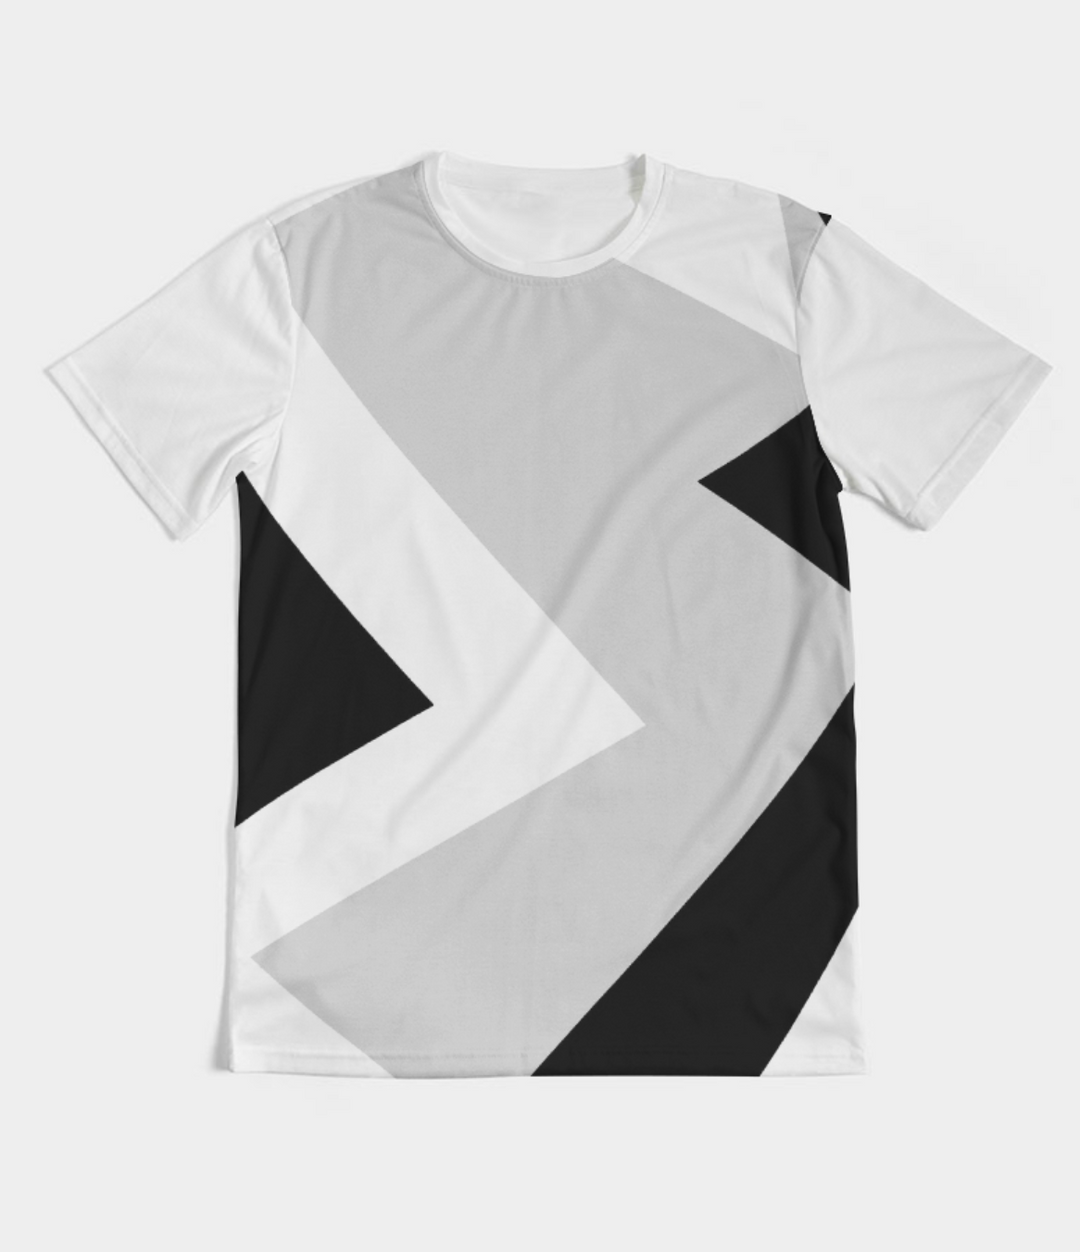 Fragment Tee | Retro Air Jordan 4 Military Black Colorblock T-shirt